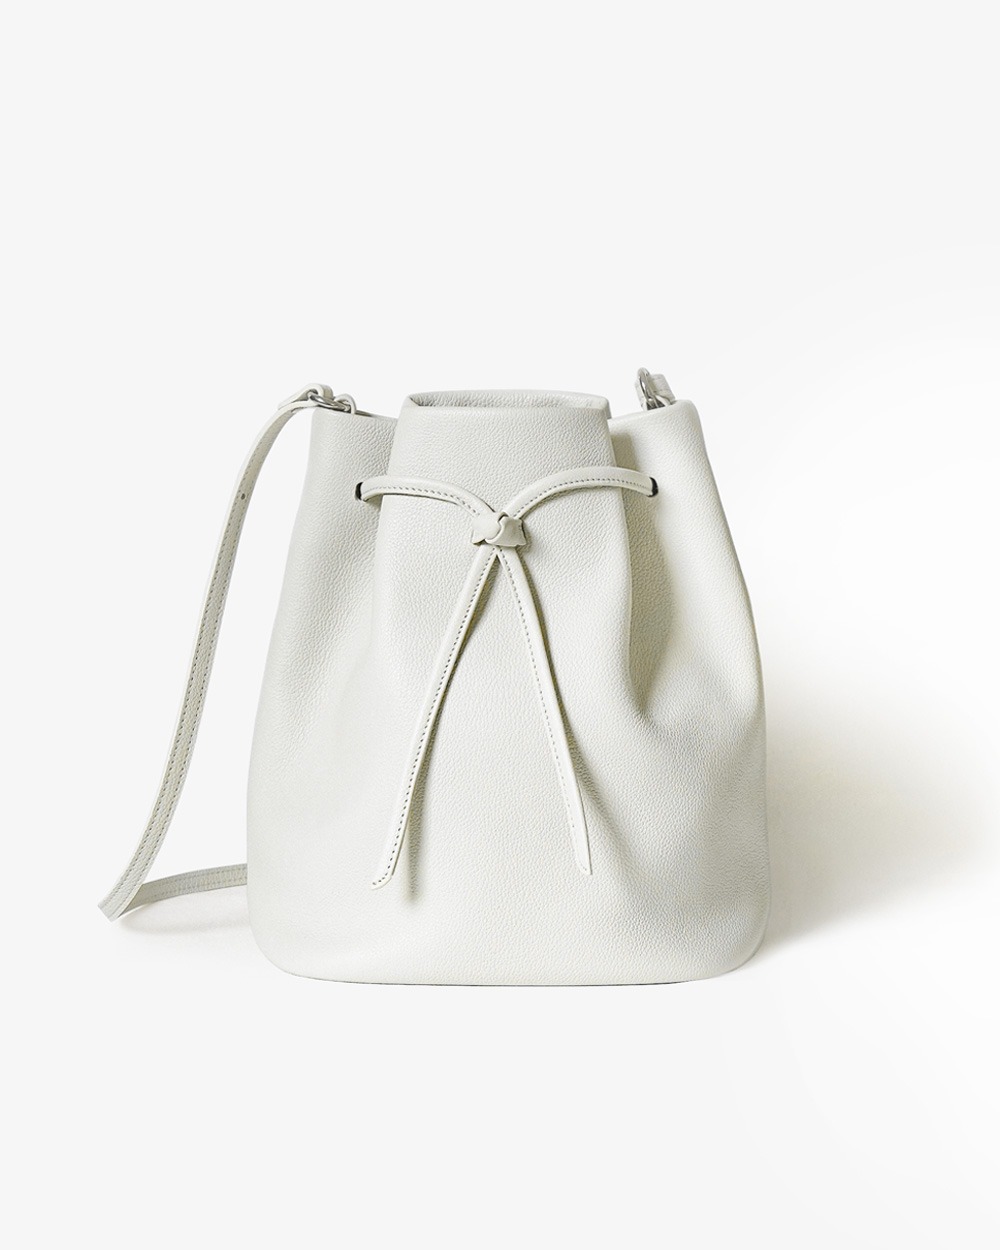 Knot Bucket Bag (노트 버킷백) / Light gray